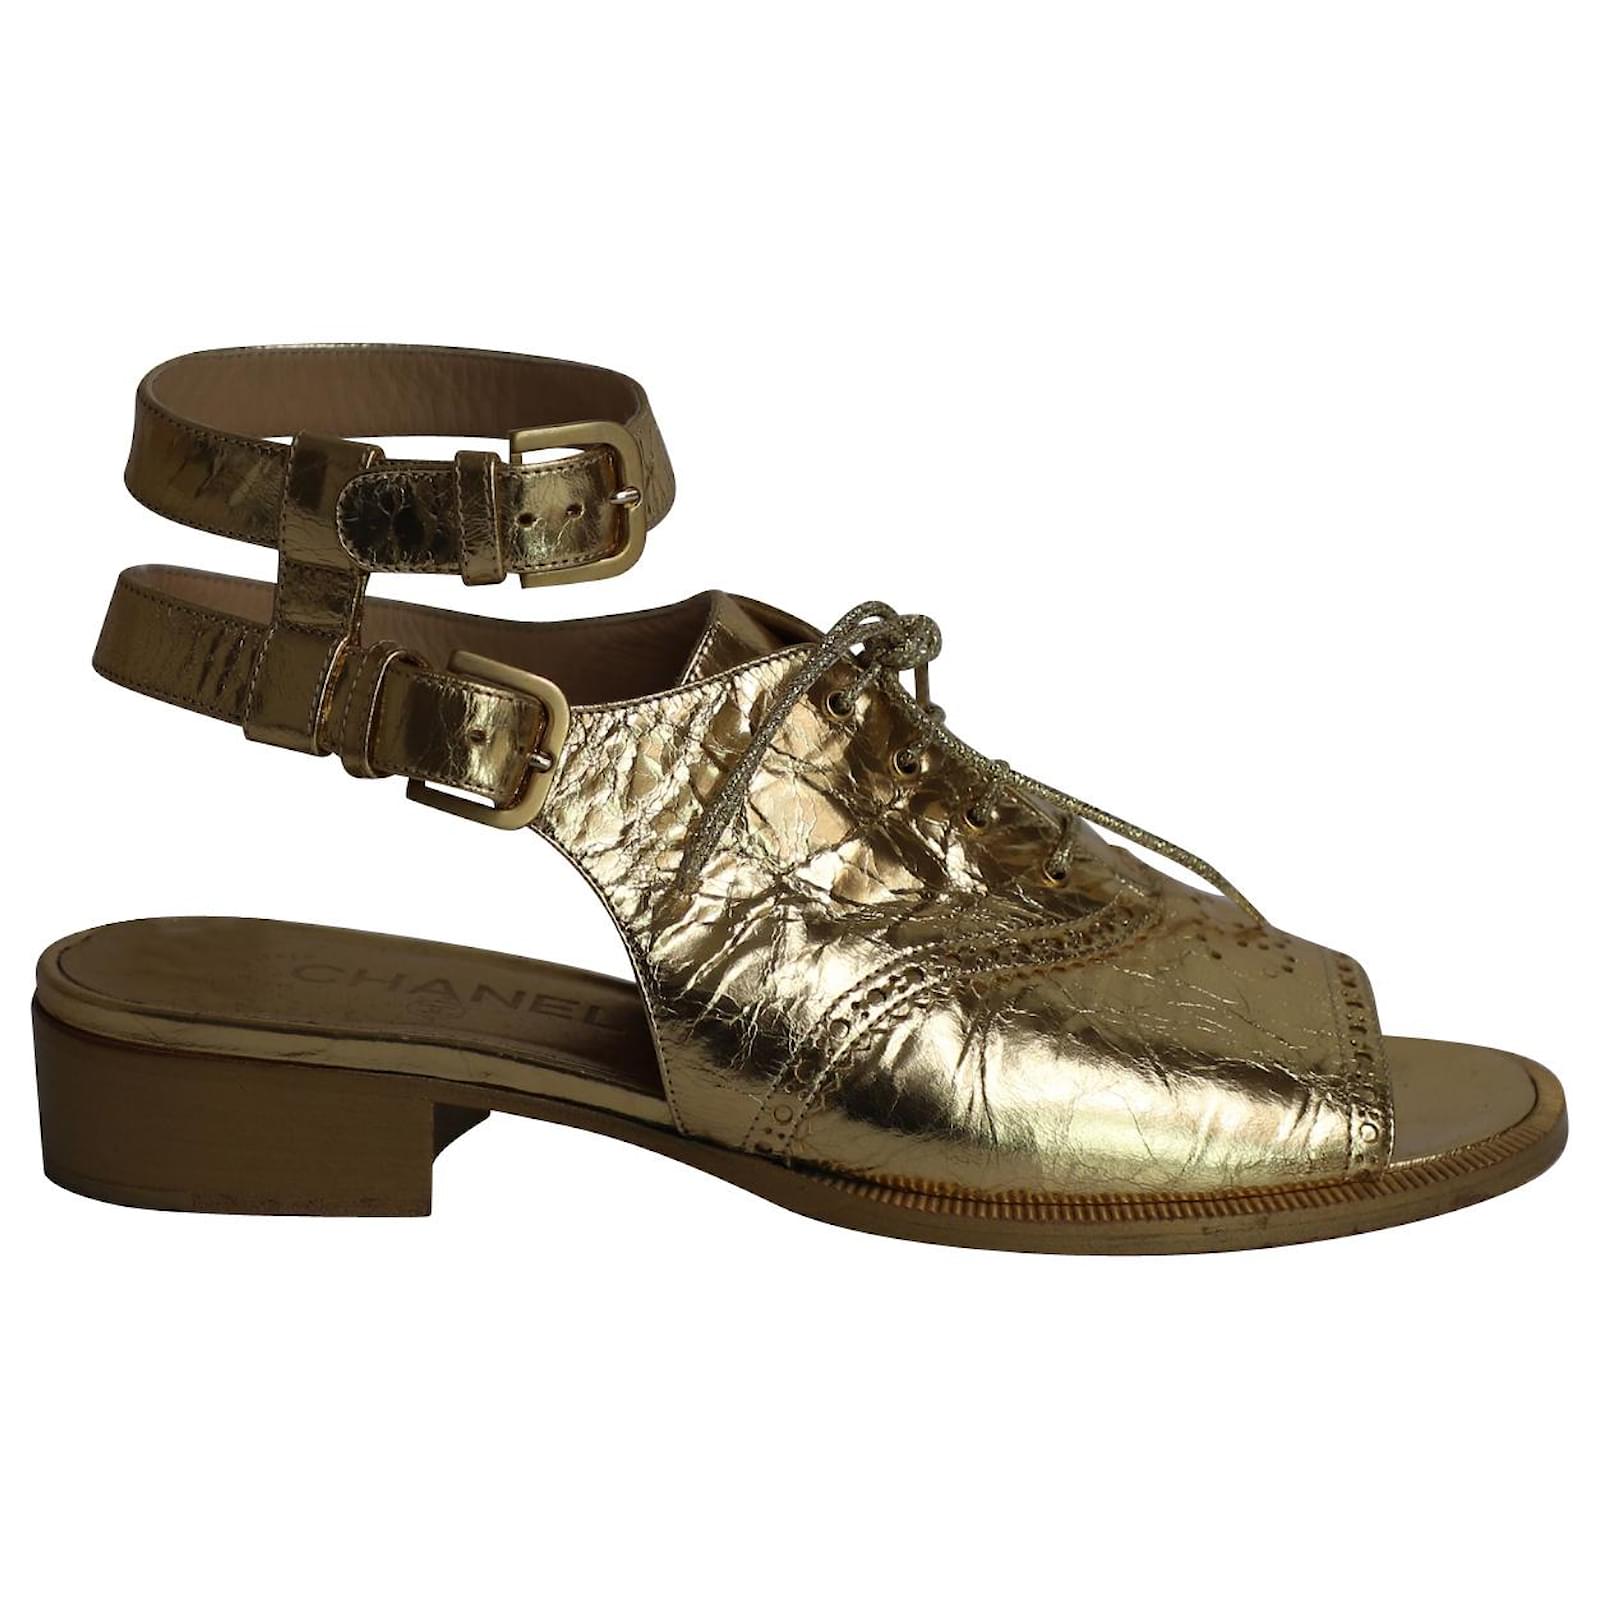 Chanel Metallic Brogue Style Open Toe Sandals in Gold Calfskin